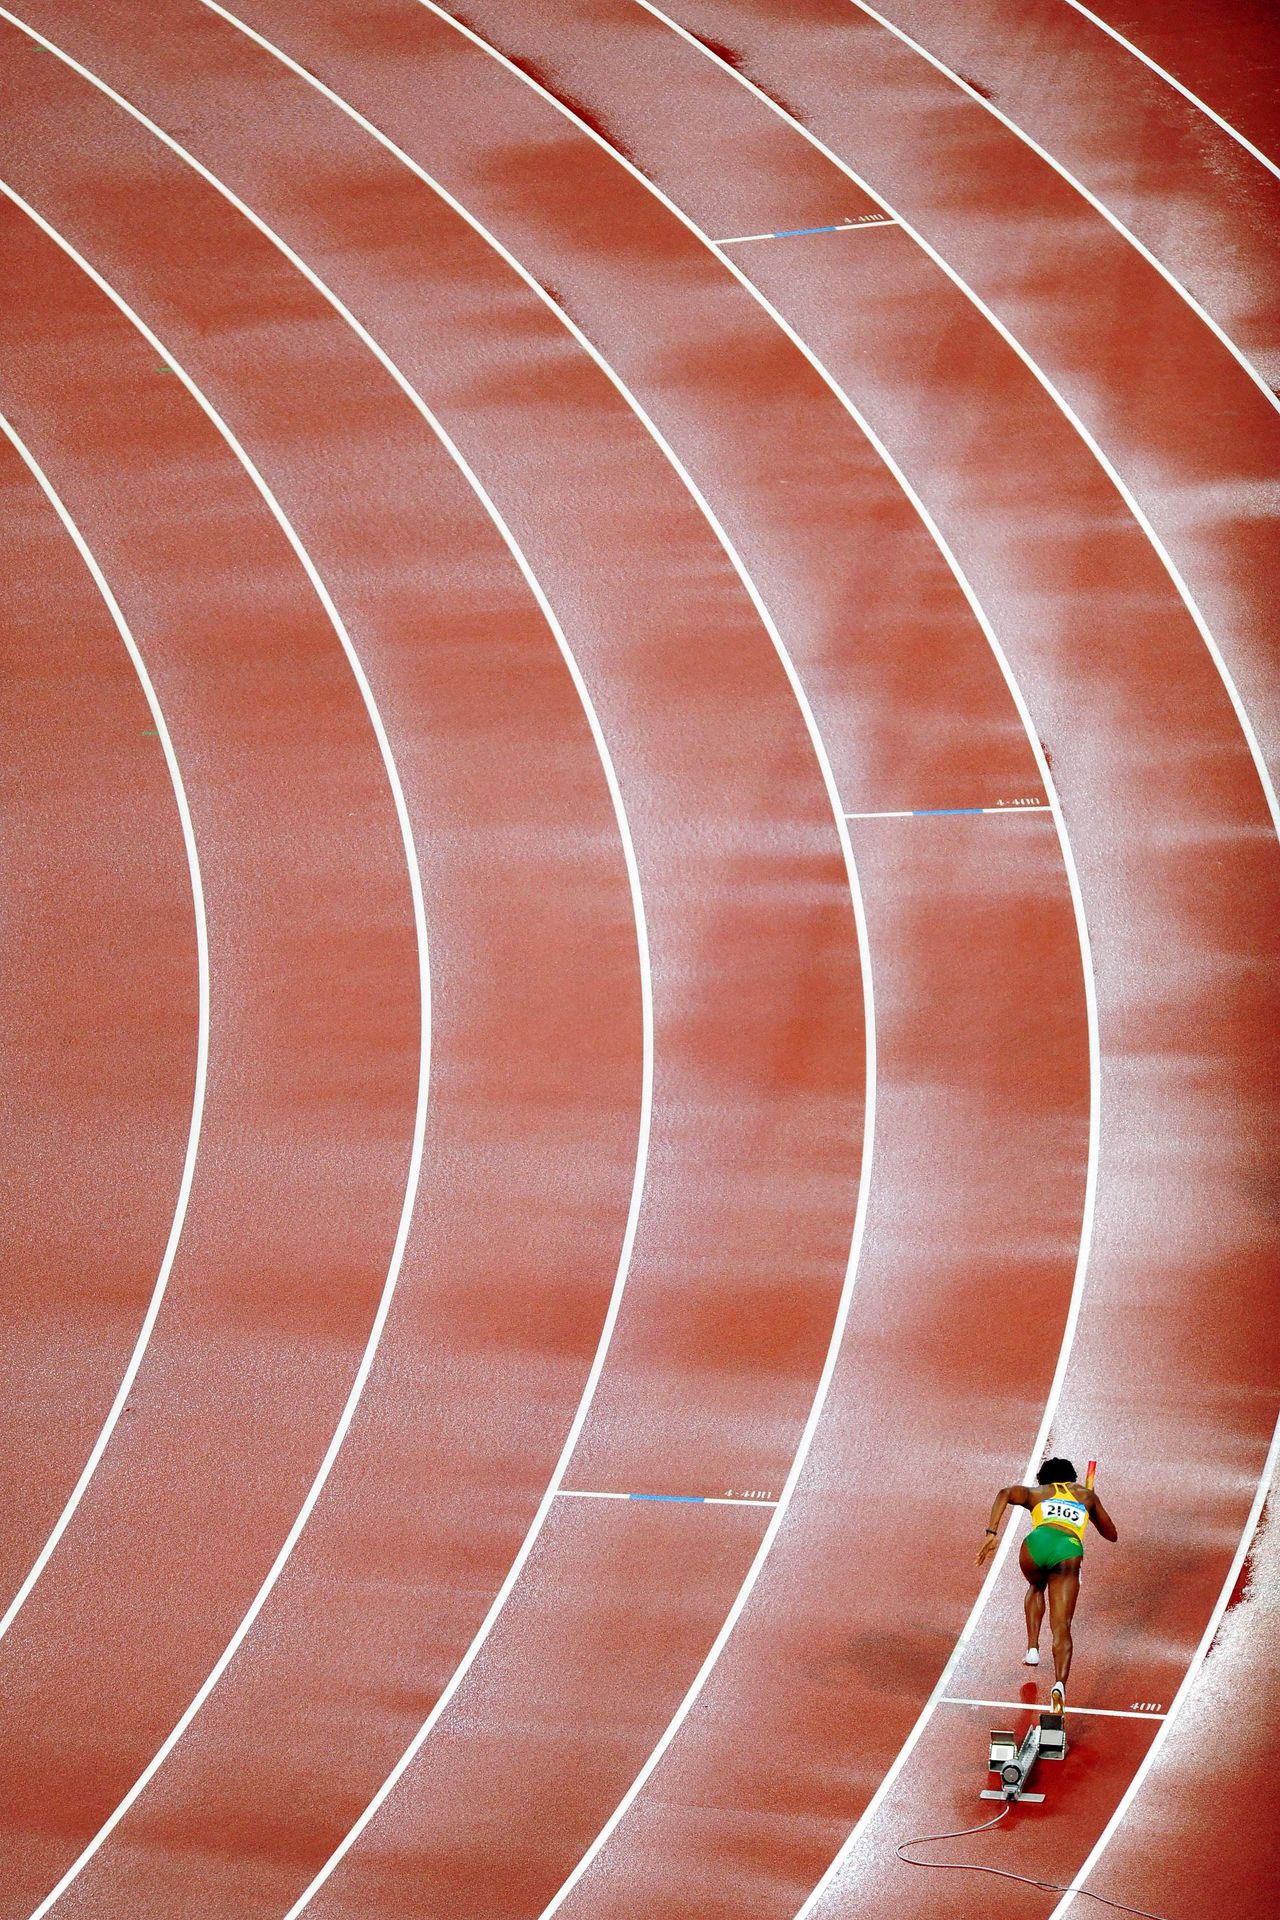 Null Beijing 2008.
4x100m, 21 August 2008.
© Richard Martin/L'Équipe
It's relay &hellip;